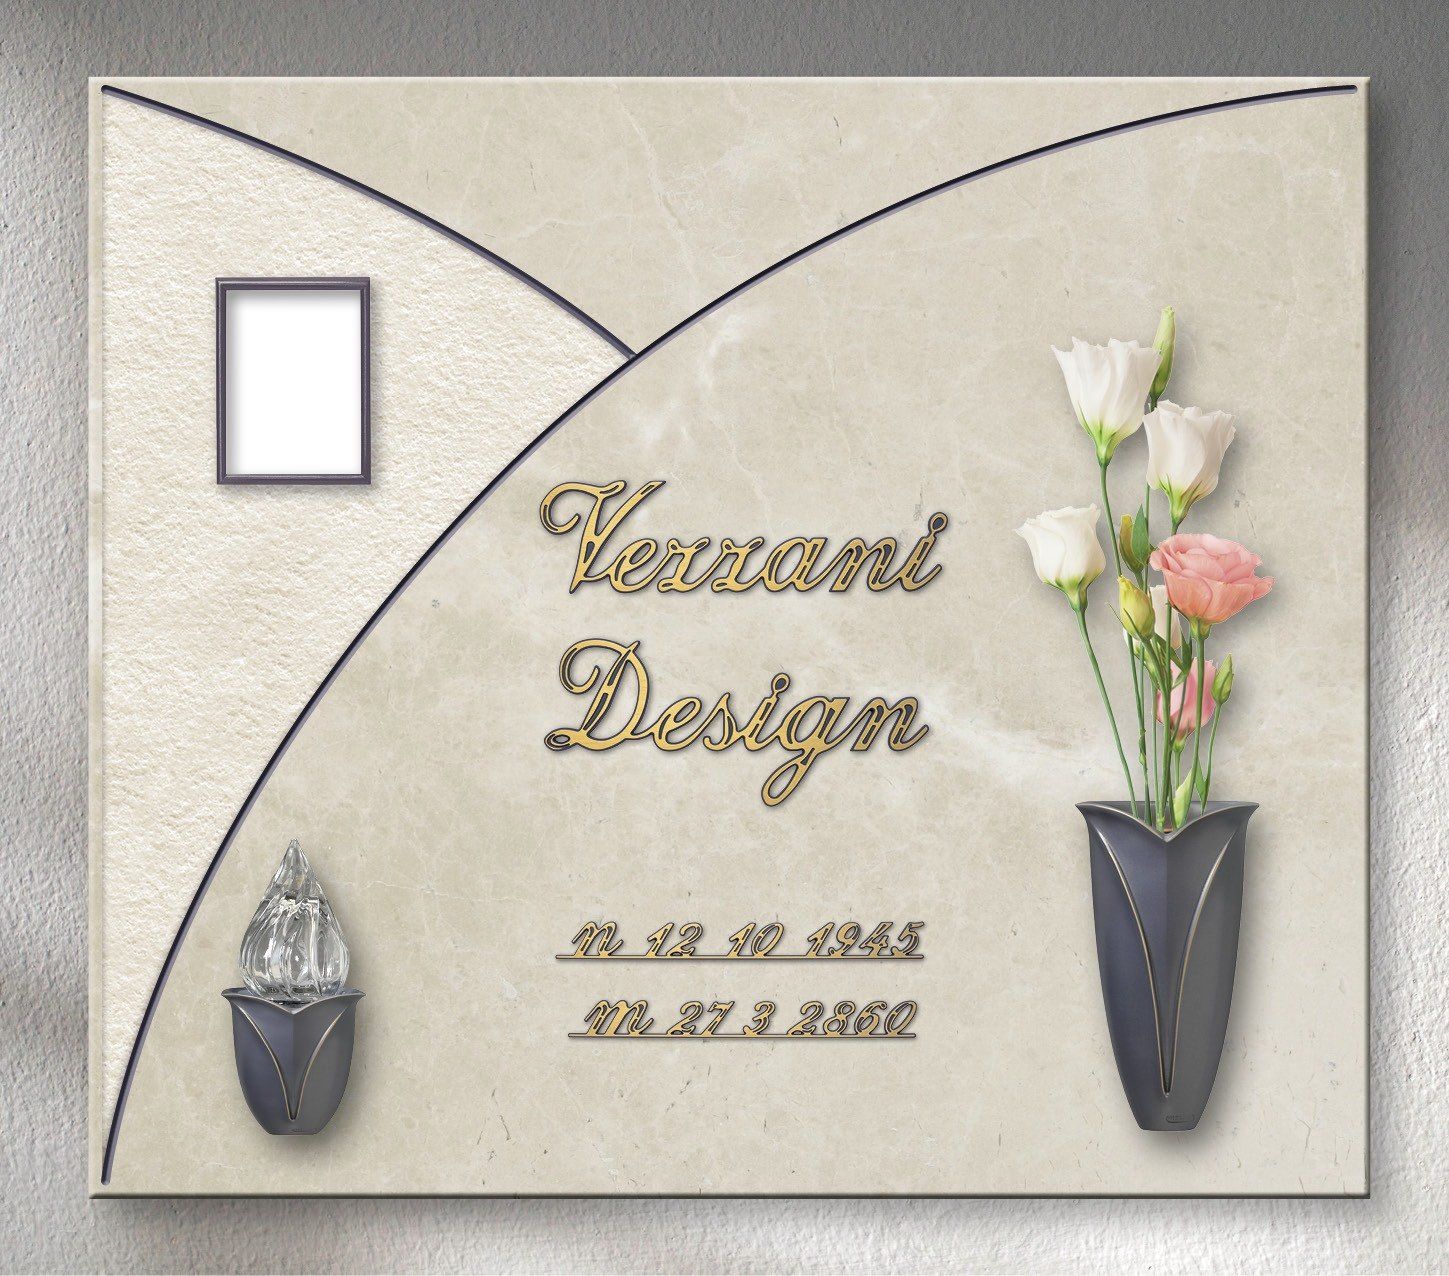 Niche with personalized engraving vezzani design 17